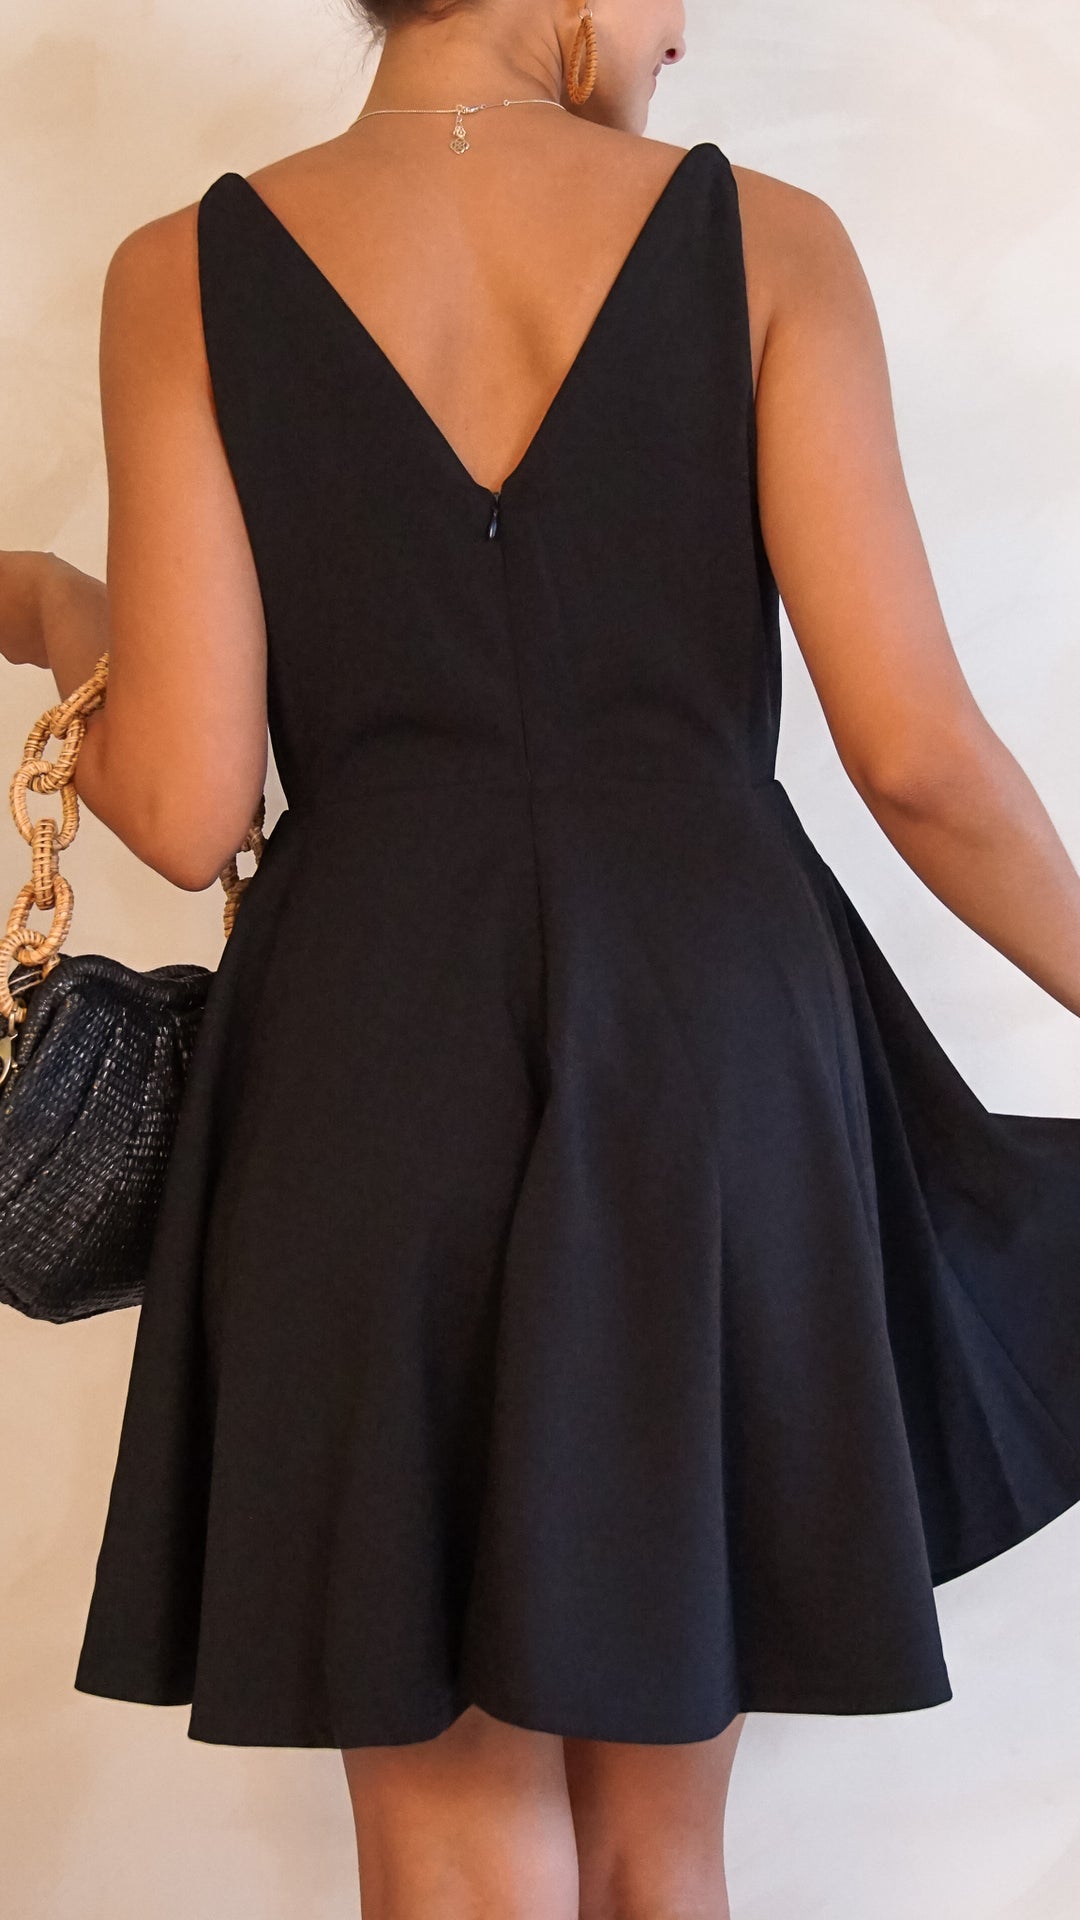 Isidora Mini Dress in Black - Steps New York